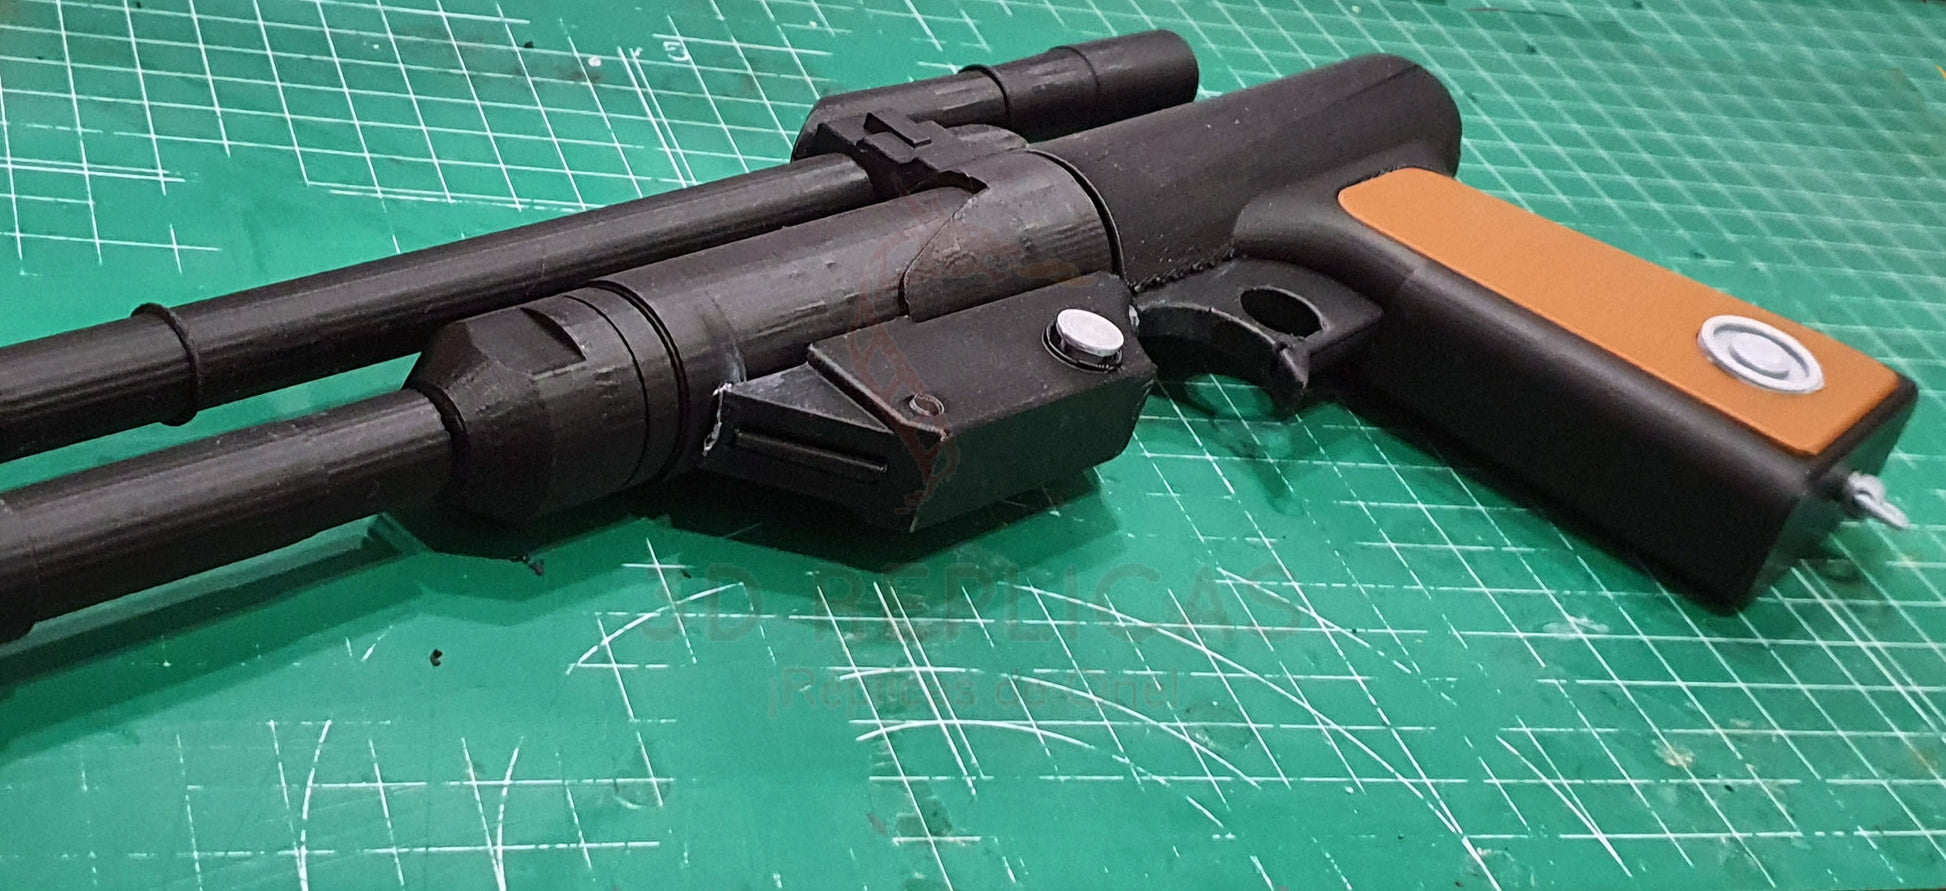 Star Wars The Mandalorian Boba Fett Blaster Pistol Cosplay Prop Replica Gun 2020 SCREEN ACCURATE VERSION!